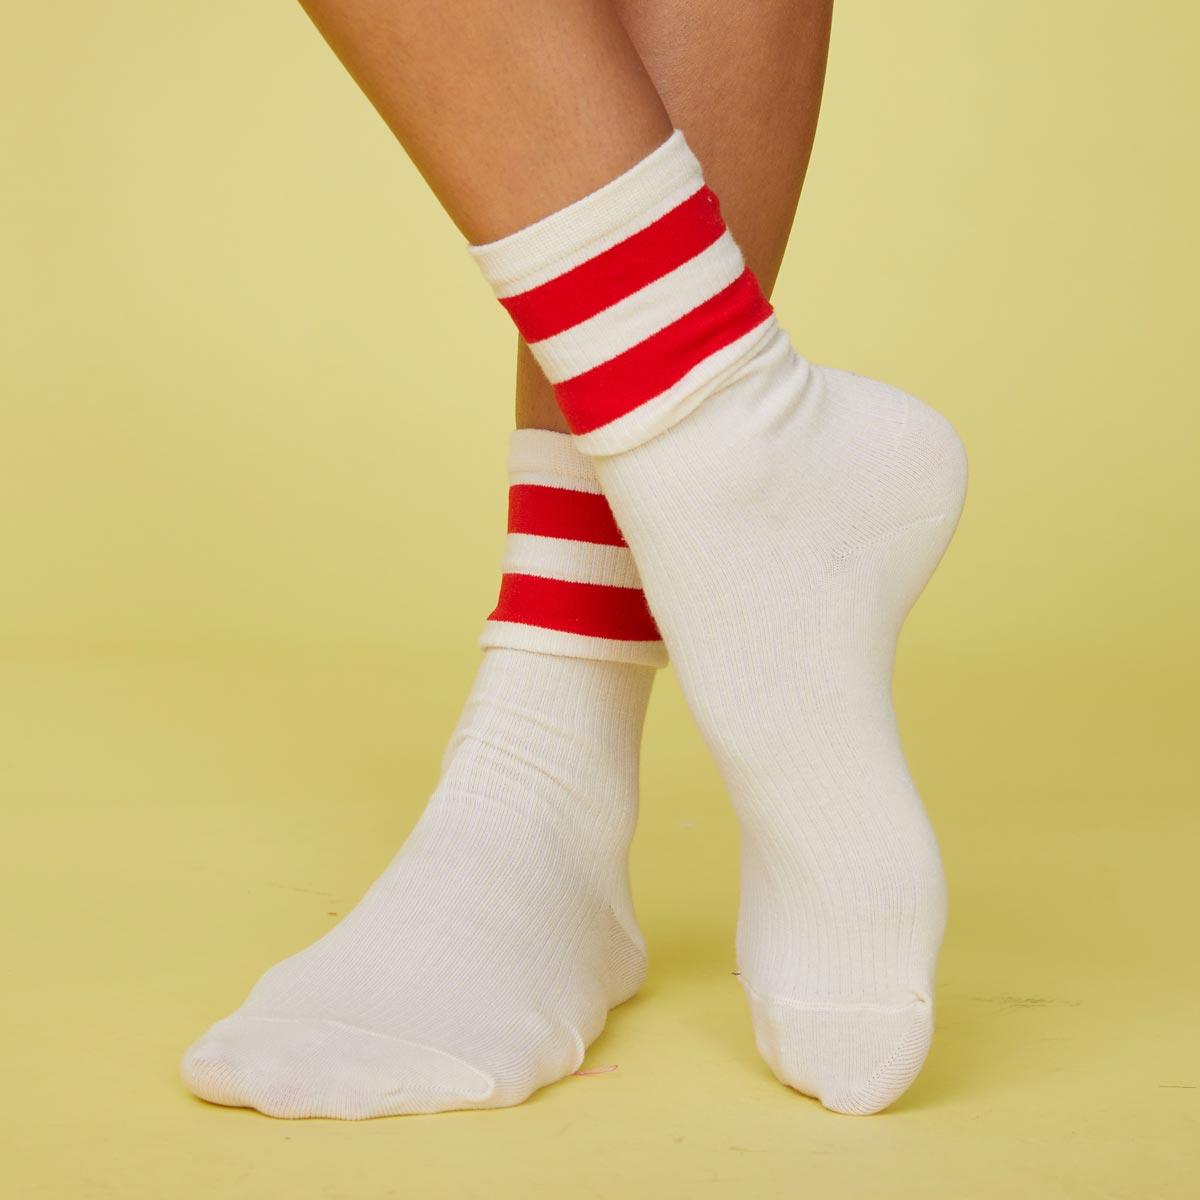 Monrow Stripe Socks in Bone/Blood Red, Size All